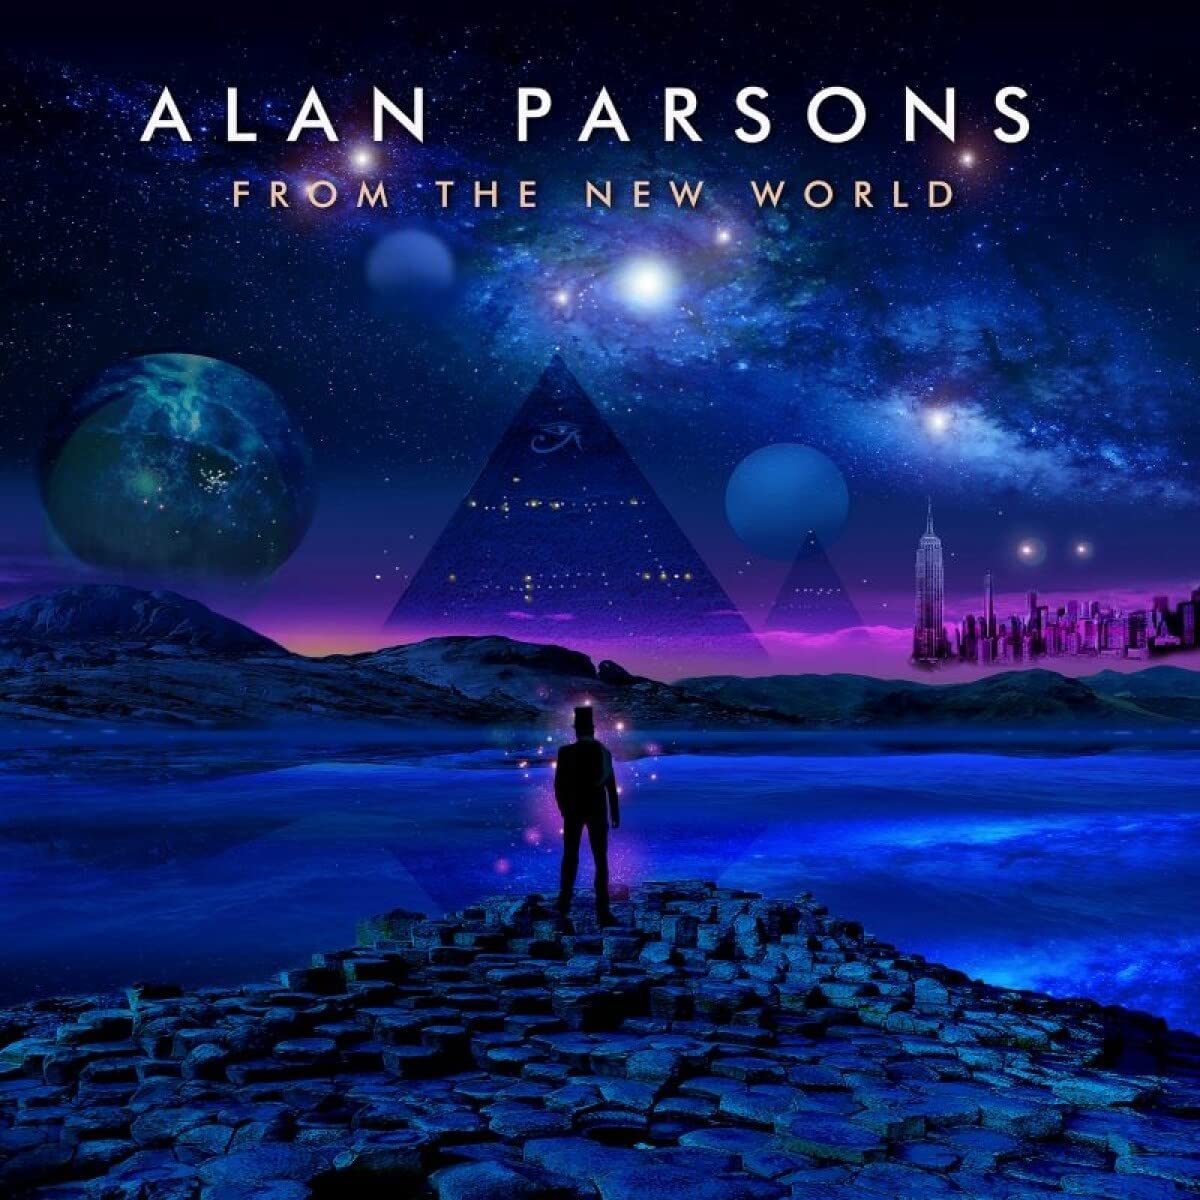 Alan Parsons: il nuovo album in studio “From The New World” – VIDEO & COMPRA